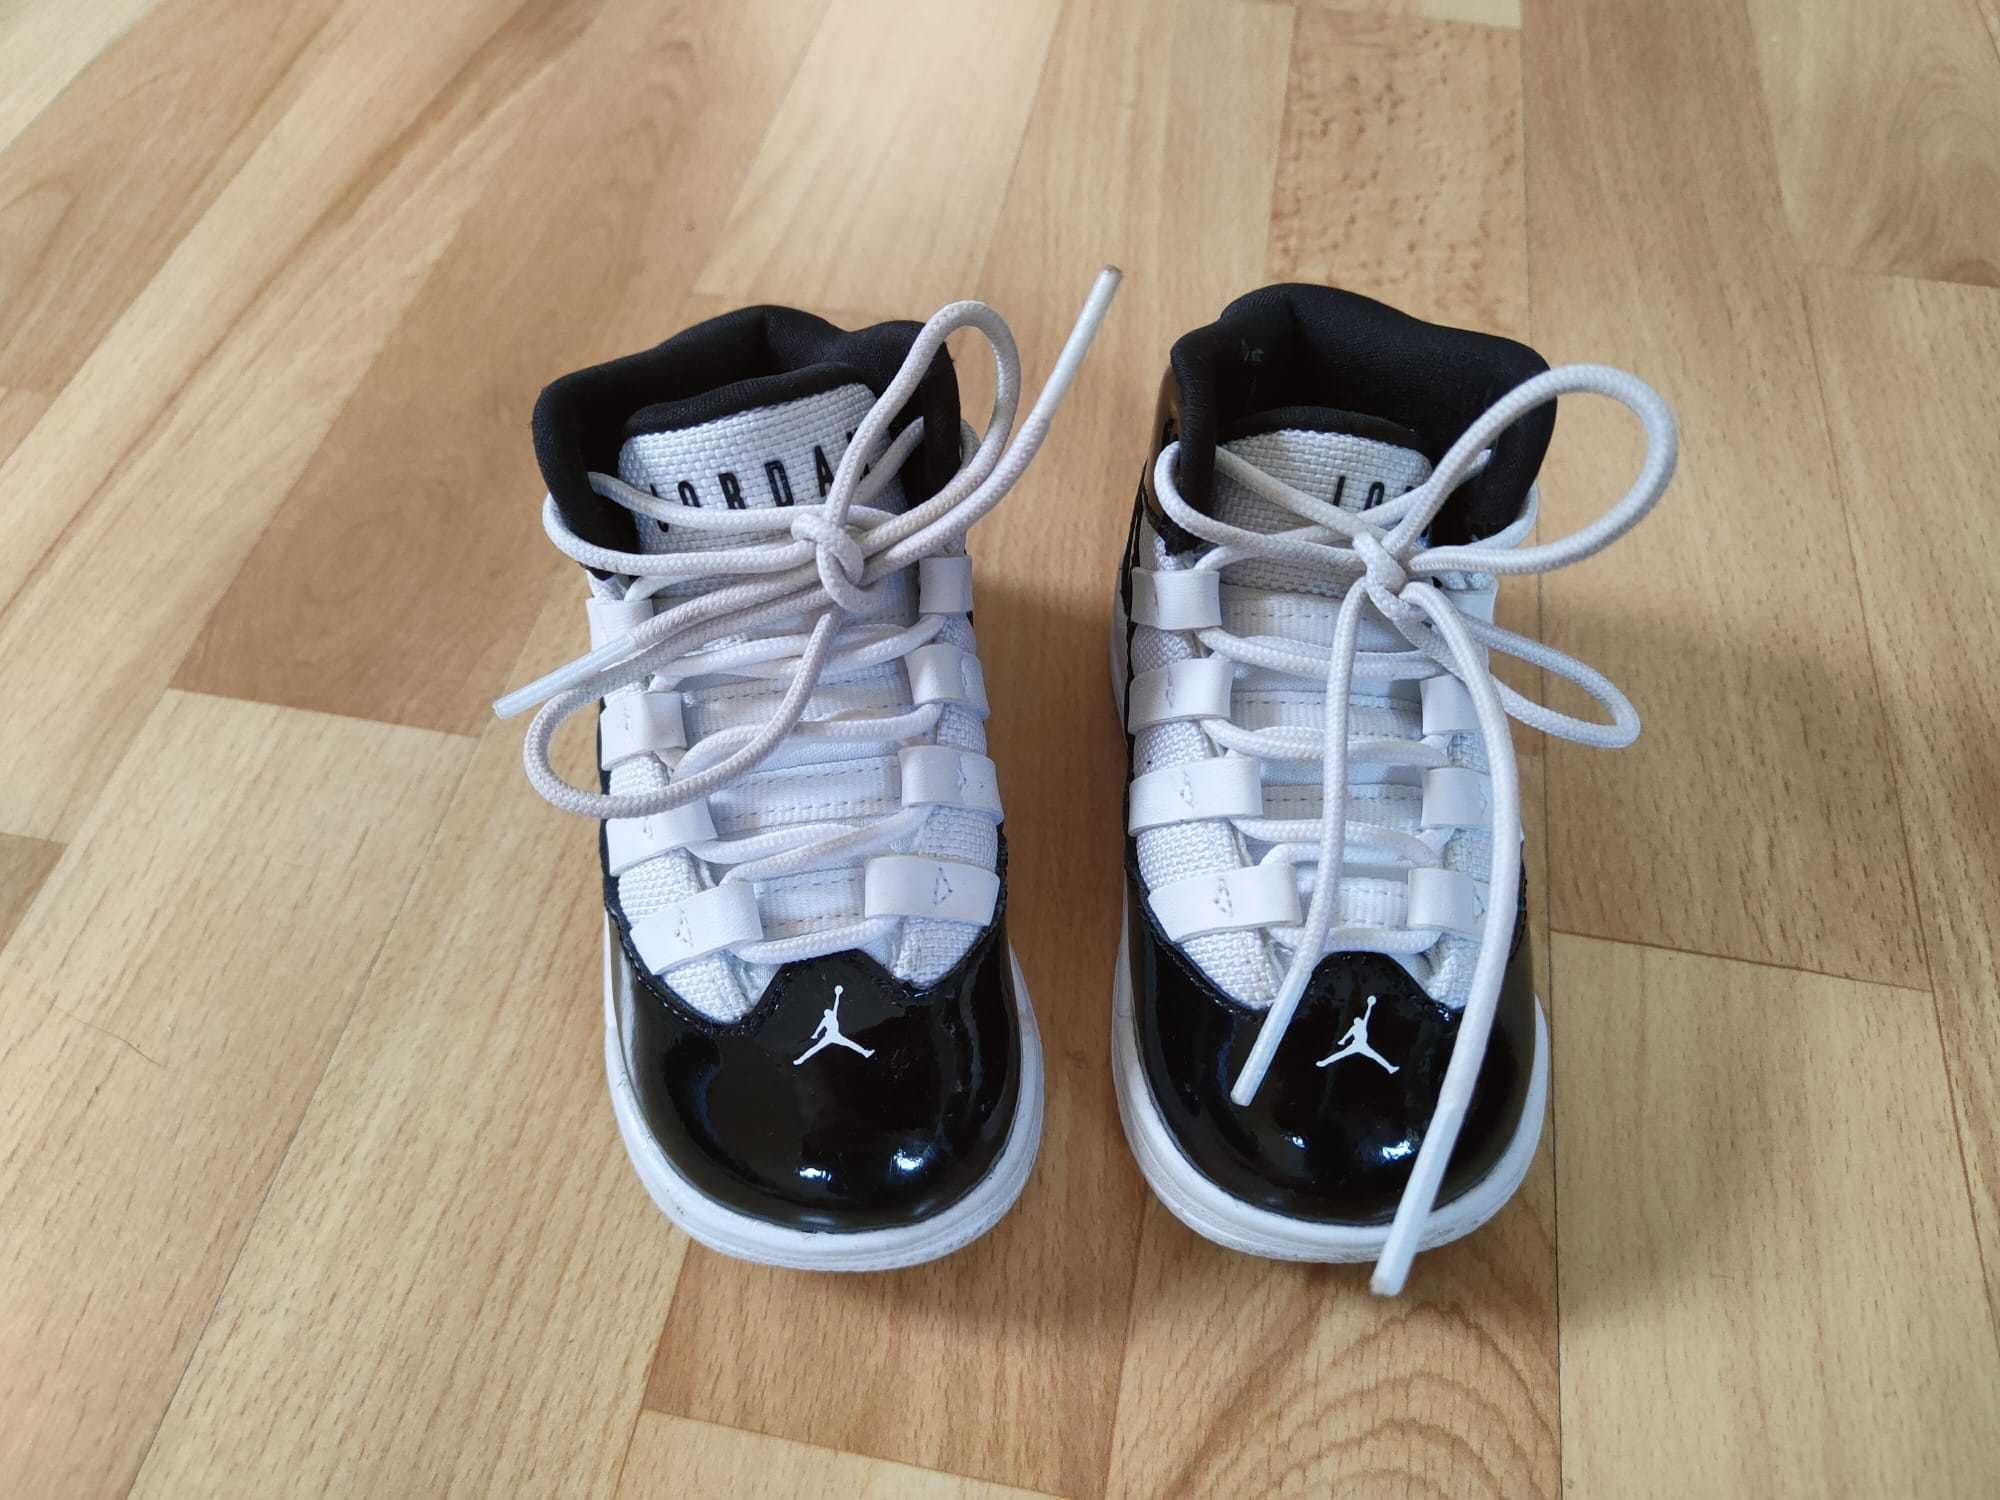 Adidasy buty chłopięce Jordan Max Aura rozmiar 21 / 5.